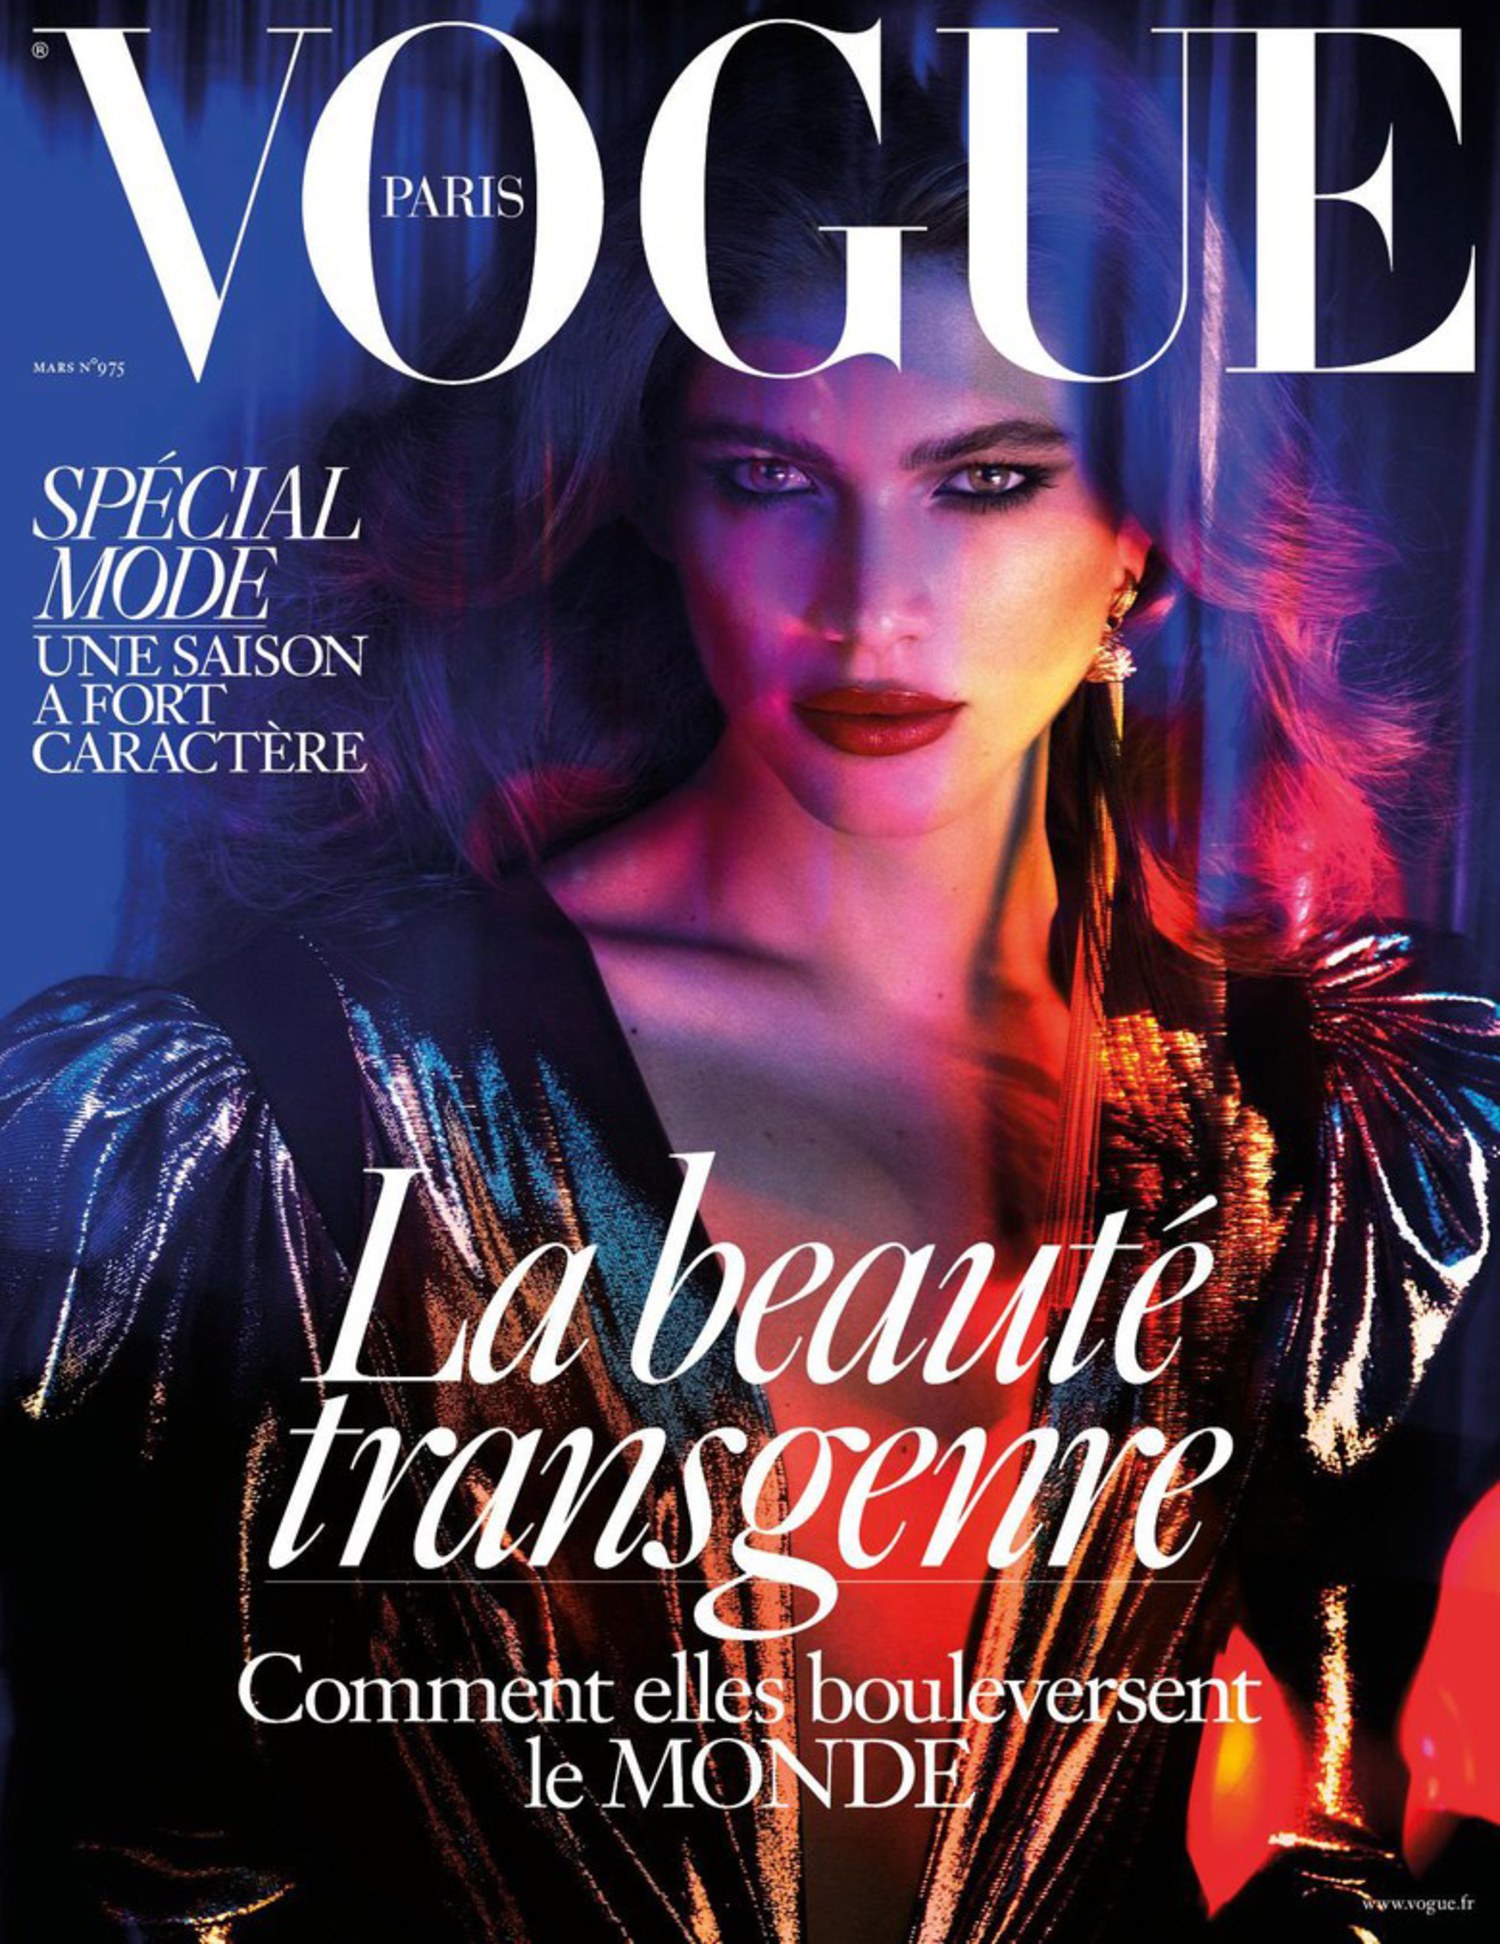 Transgender Model Valentina Sampaio Graces Cover of French Vogue